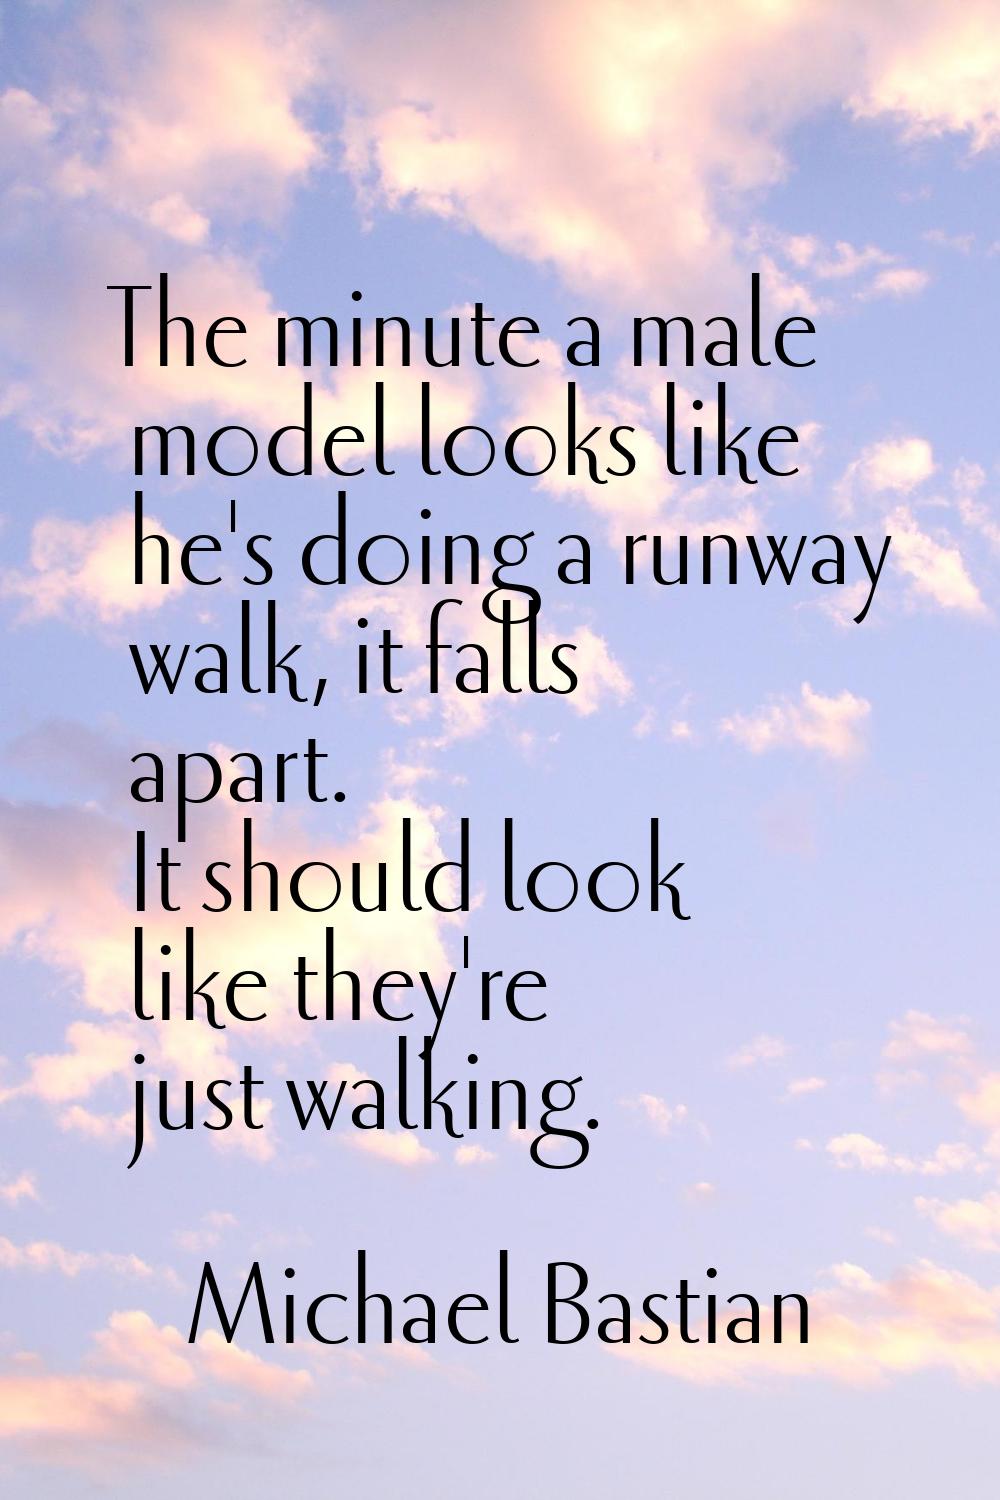 The minute a male model looks like he's doing a runway walk, it falls apart. It should look like th